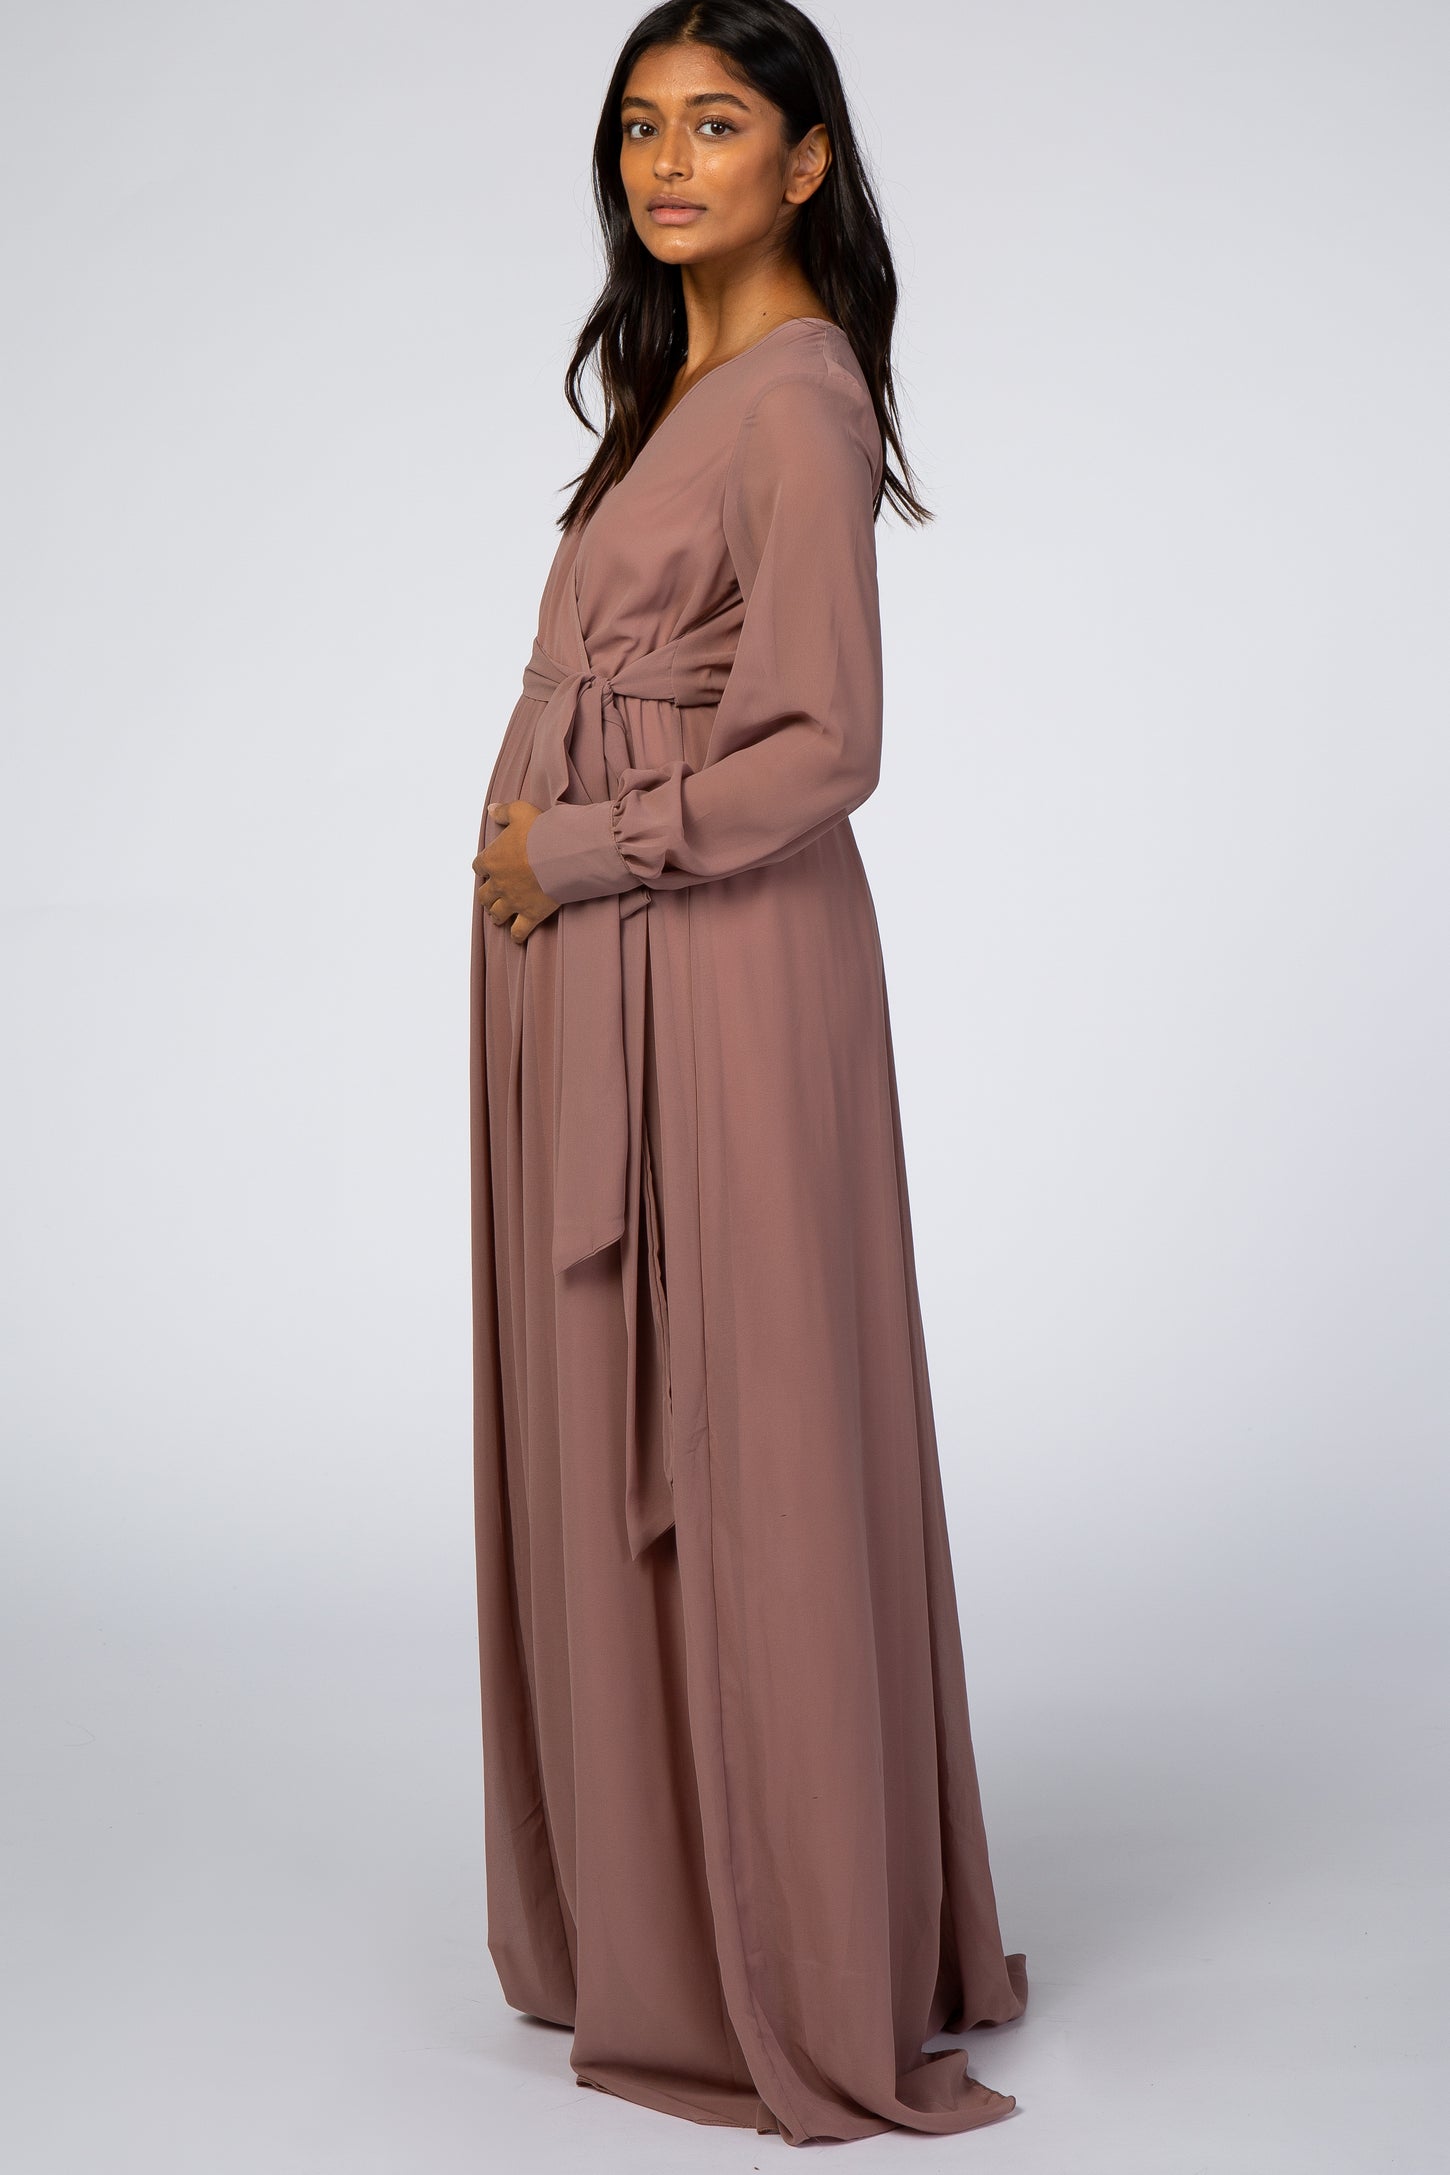 Mauve Chiffon Long Sleeve Maternity Maxi Dress